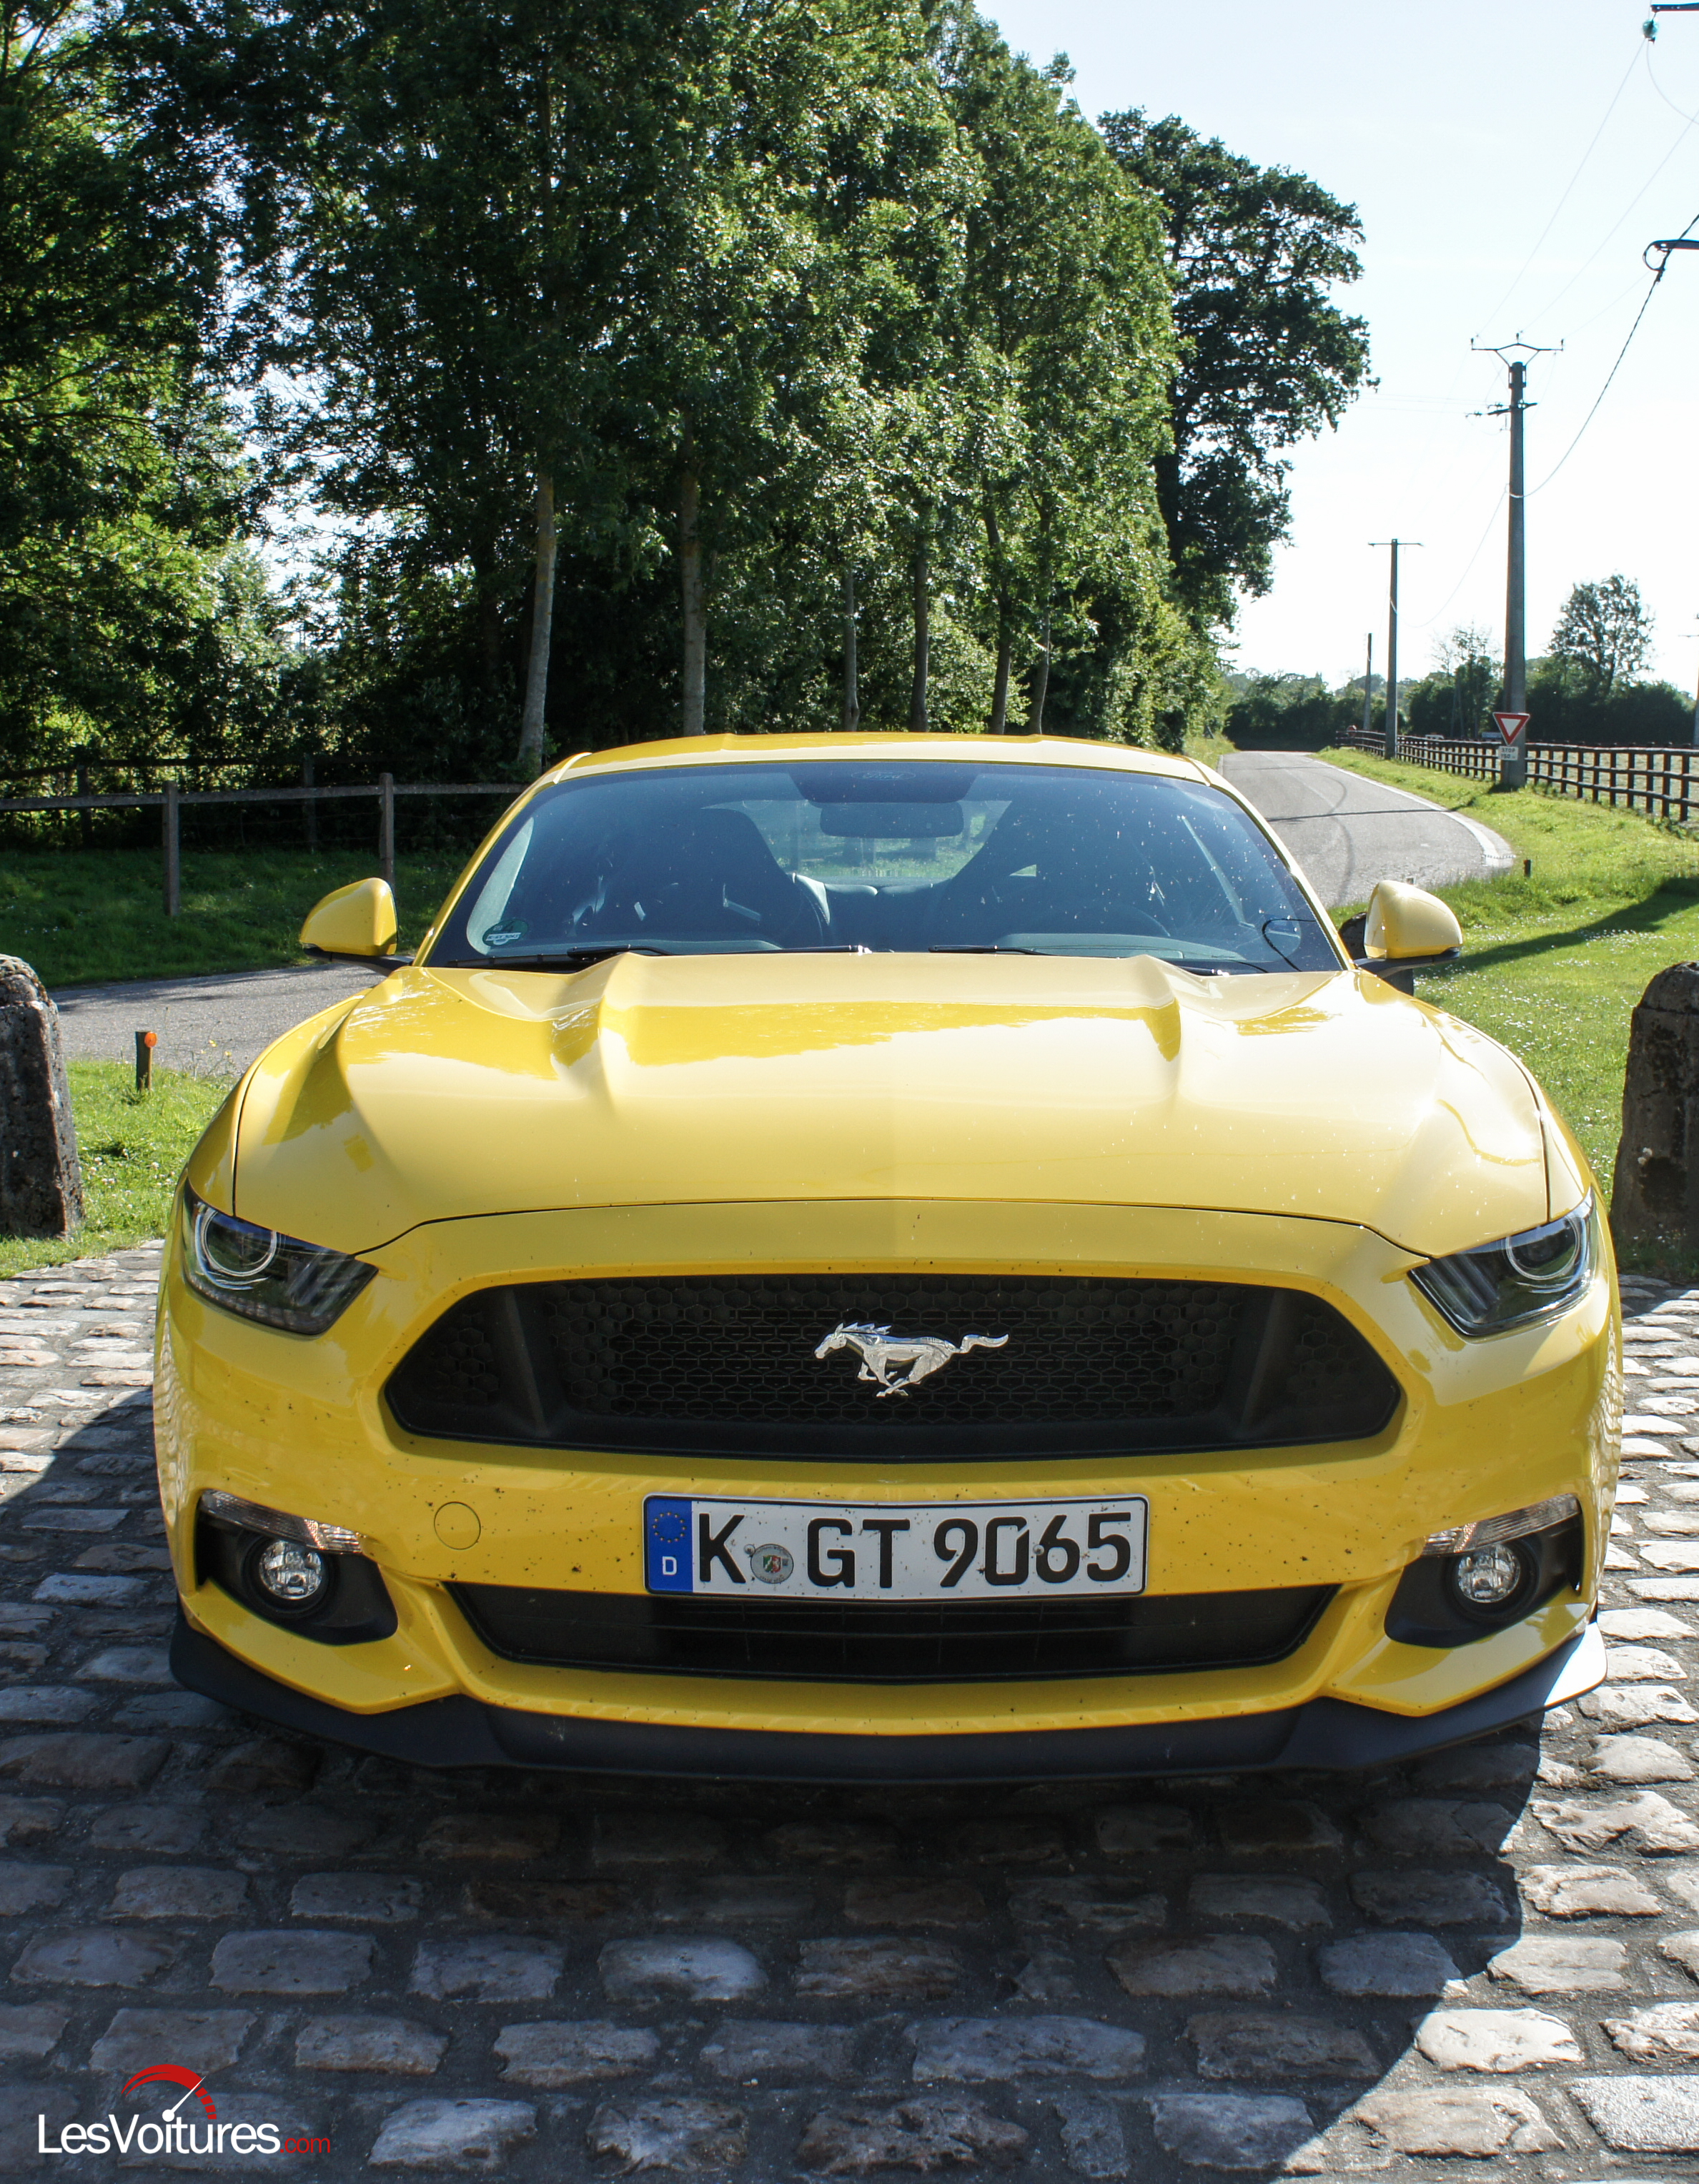 Ford Mustang : un mythe enfin accessible - Edition du soir Ouest-France -  23/01/2015